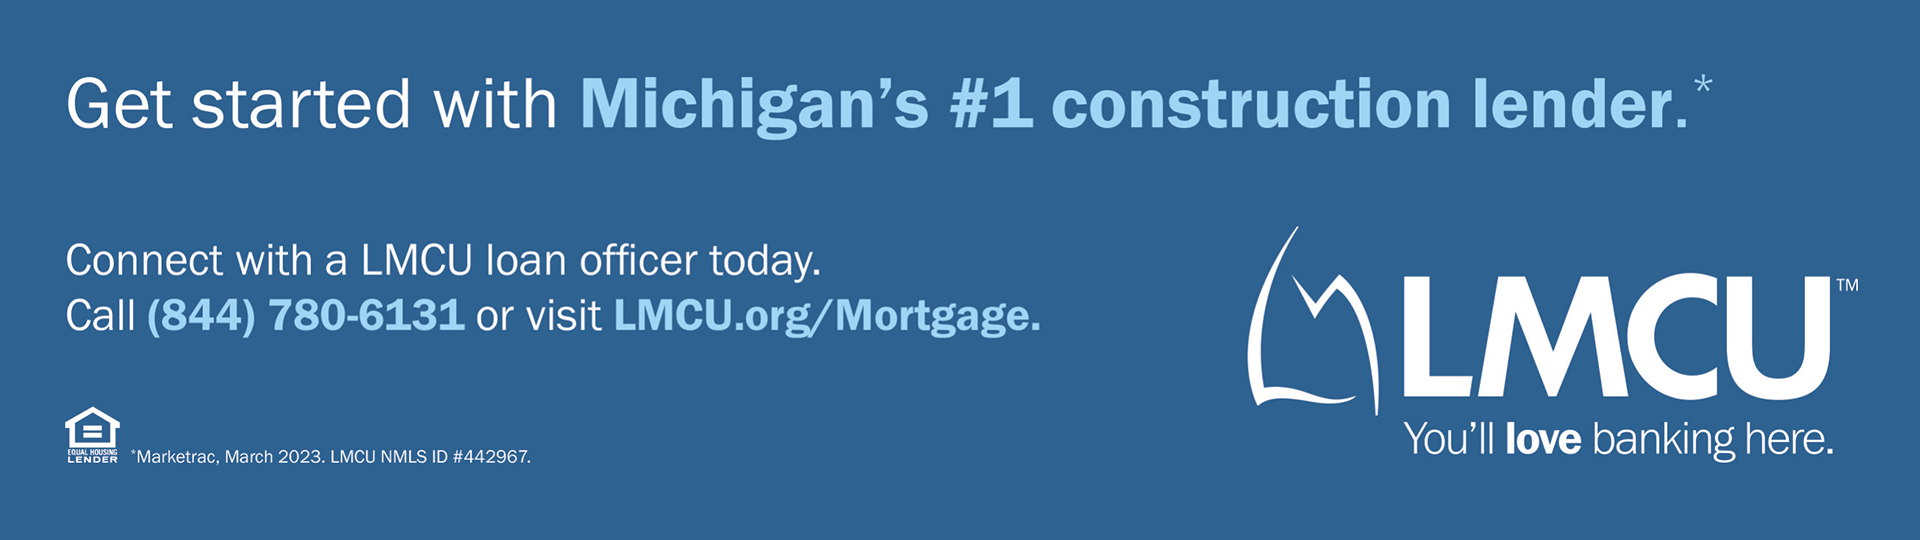 Michigan's #1 Construction Lender